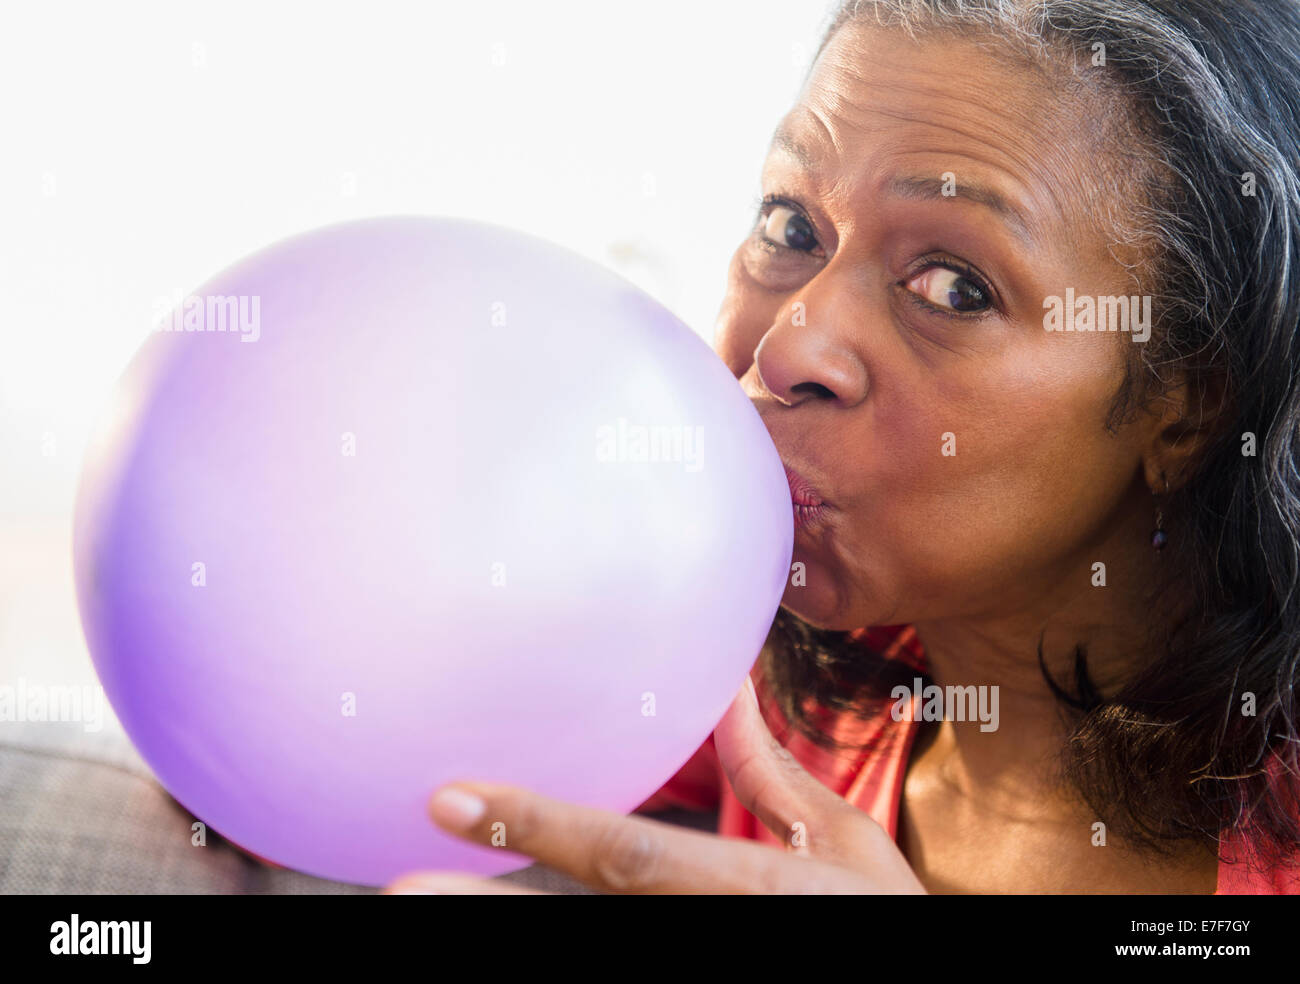 Mixed race woman blowing balloon on sofa Stock Photo